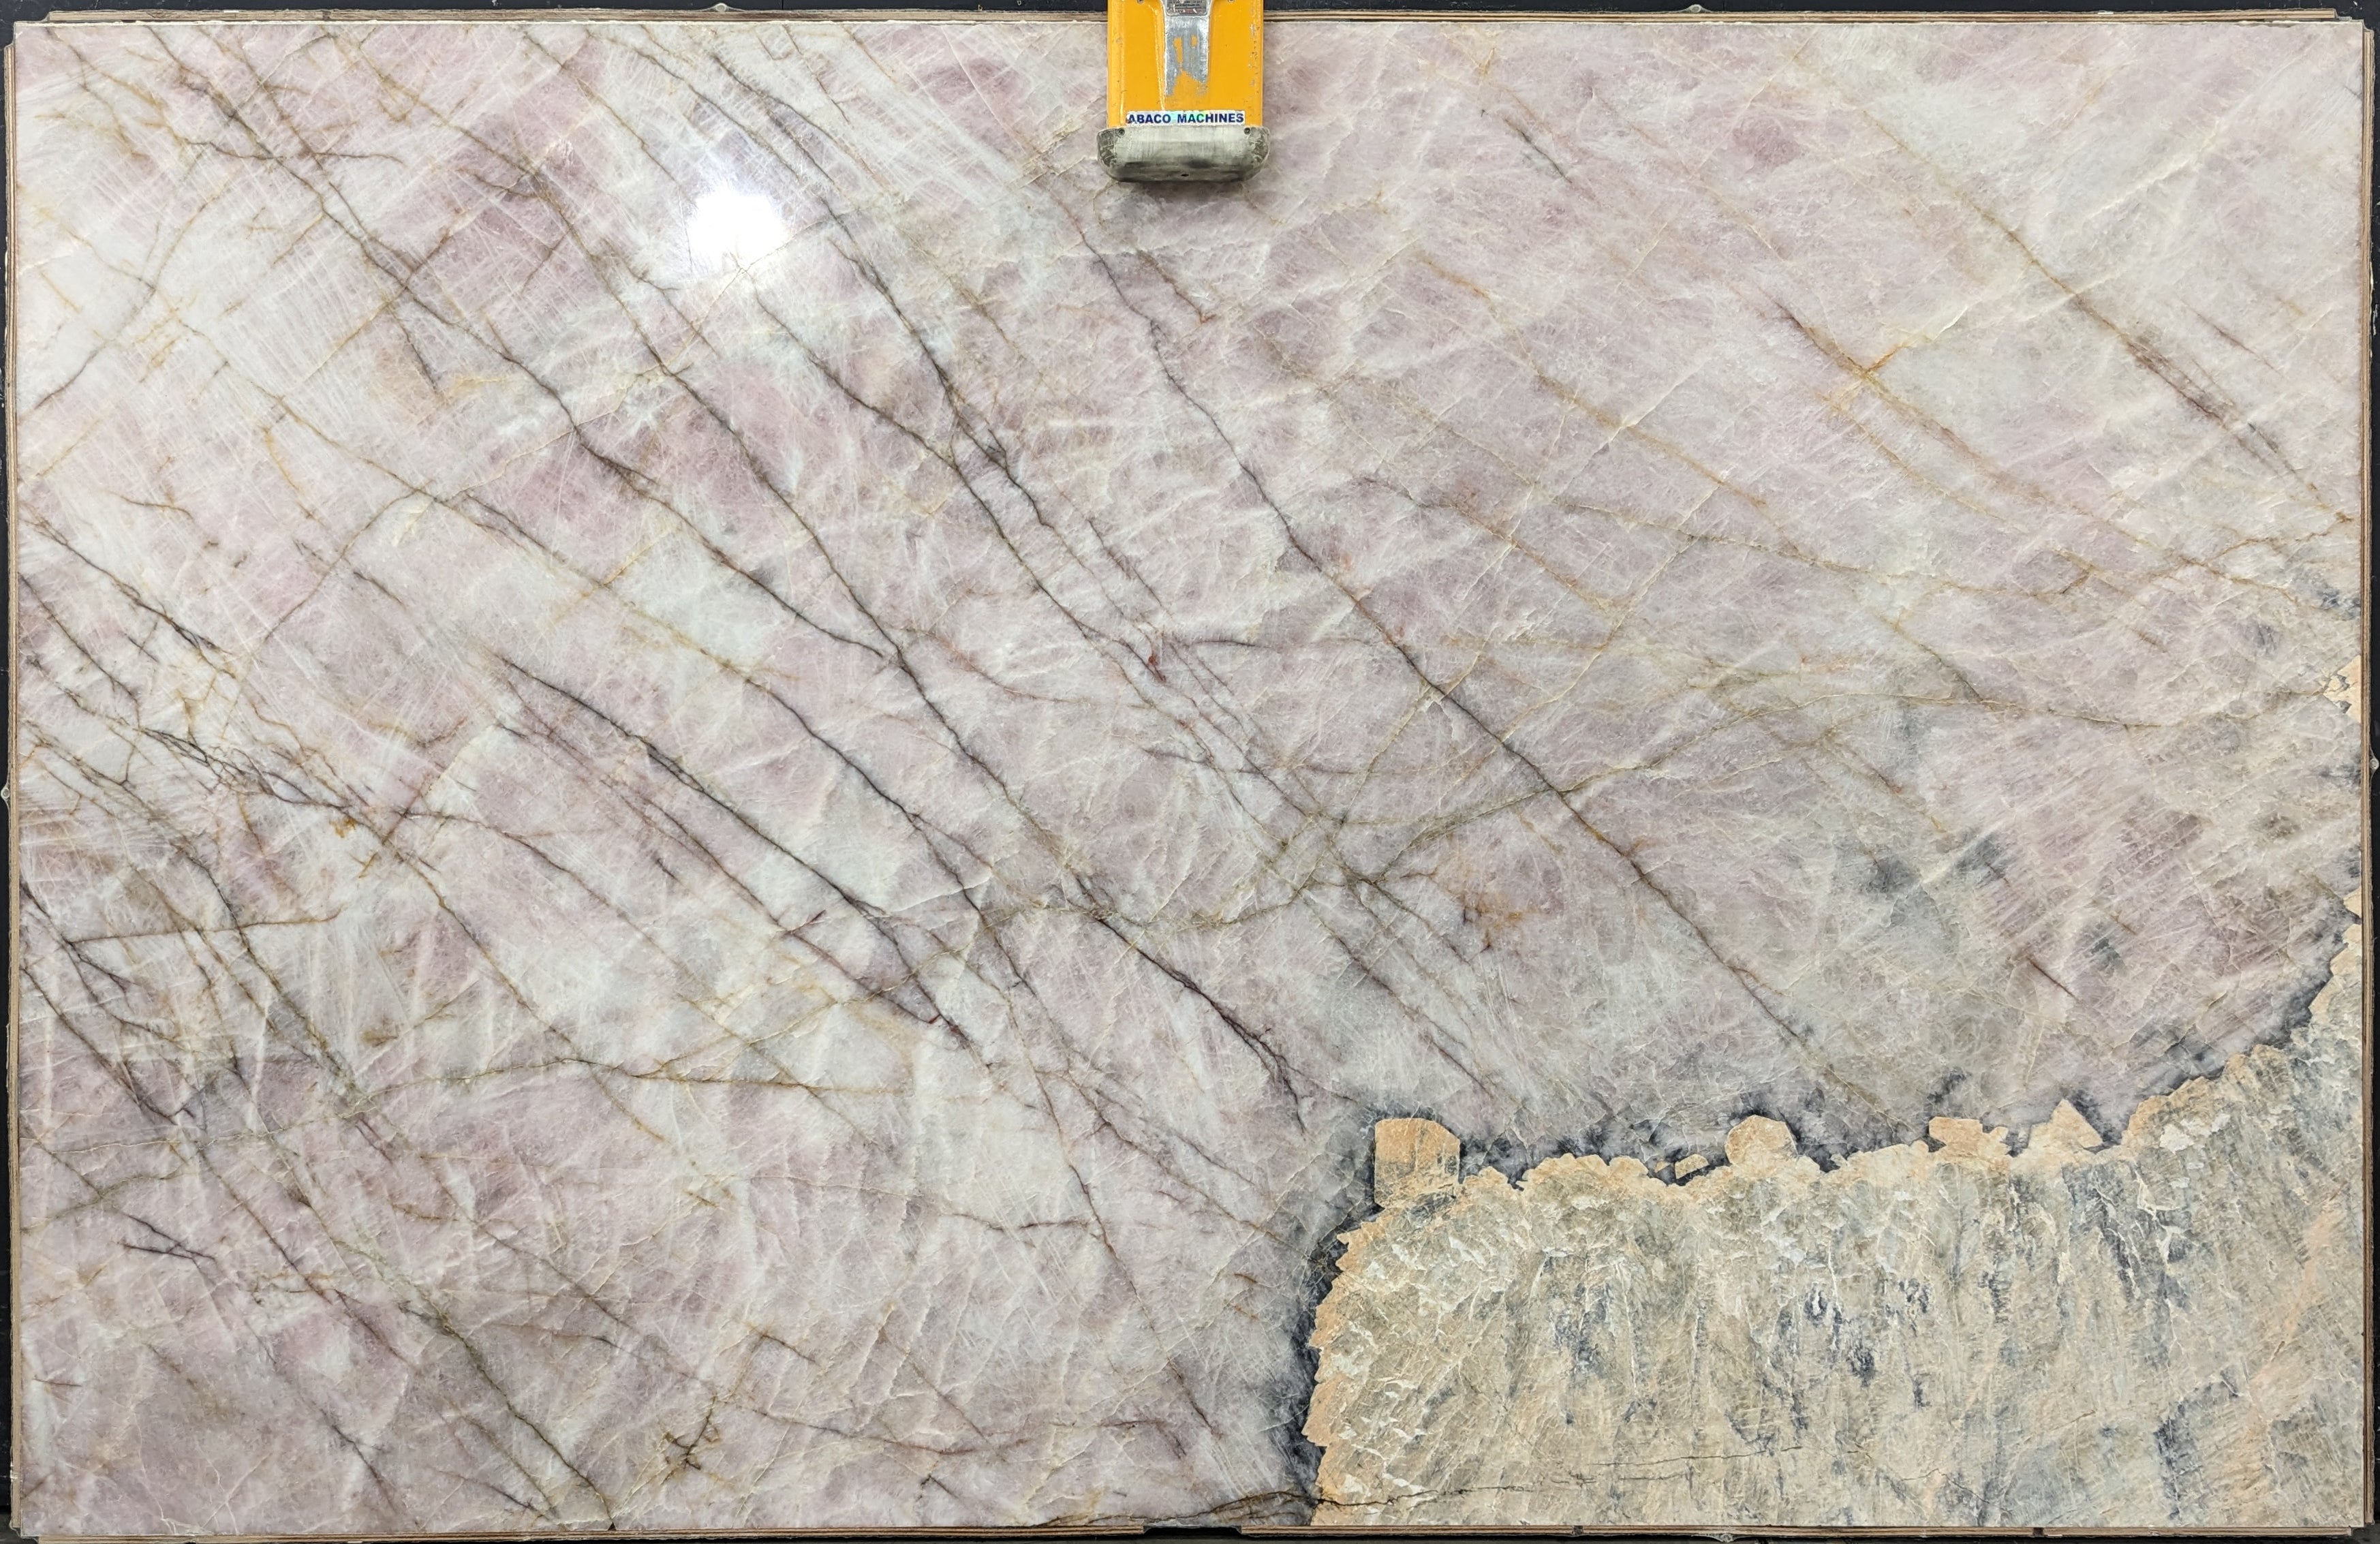  Cristallo Pink Quartzite Slab 3/4  Polished Stone - 25622#28 -  74x115 